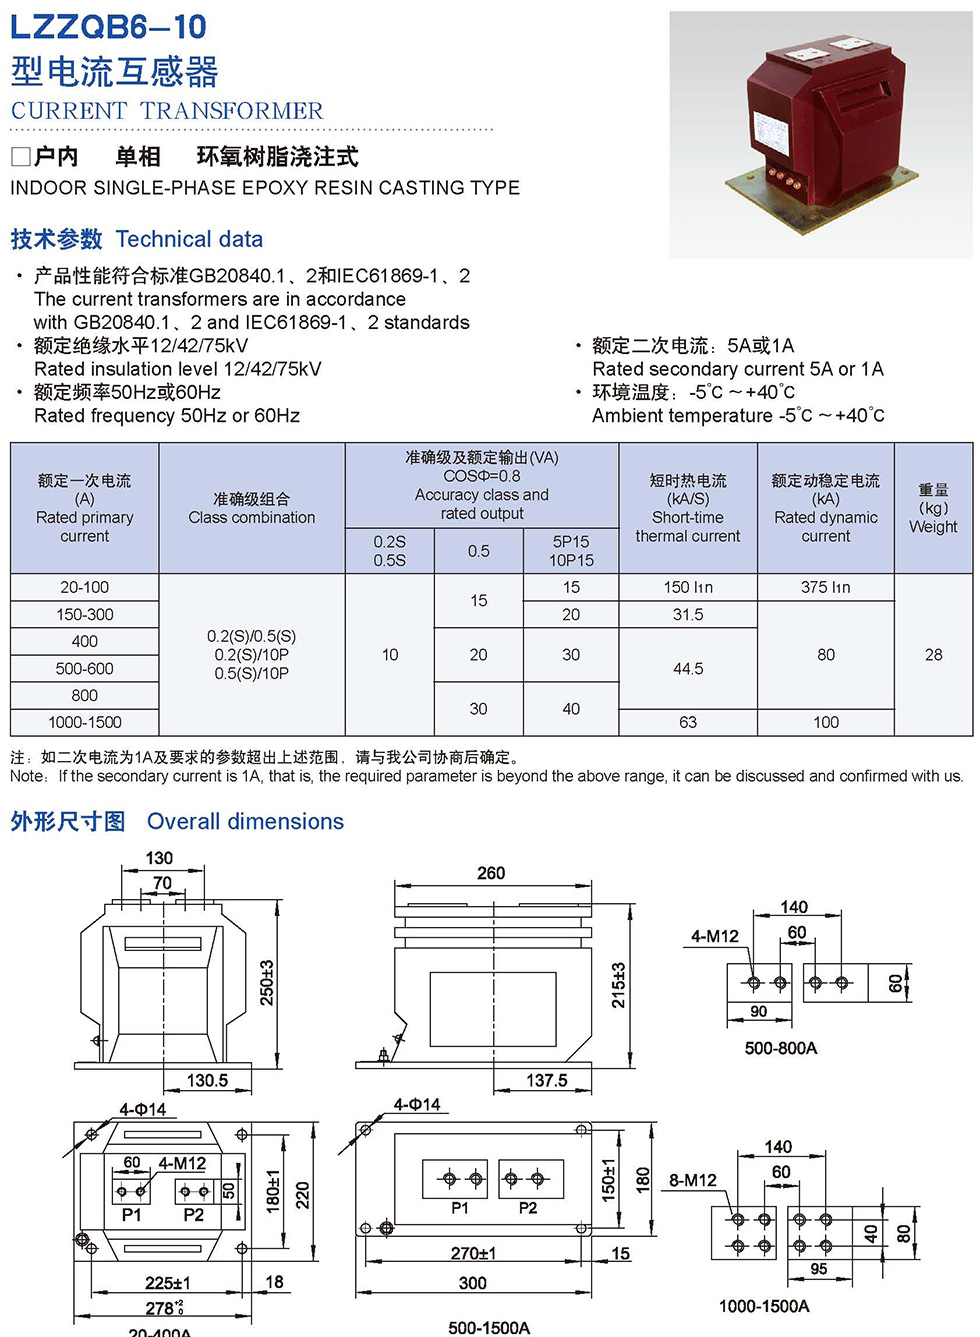 LZZQB6-10 Transformer Products